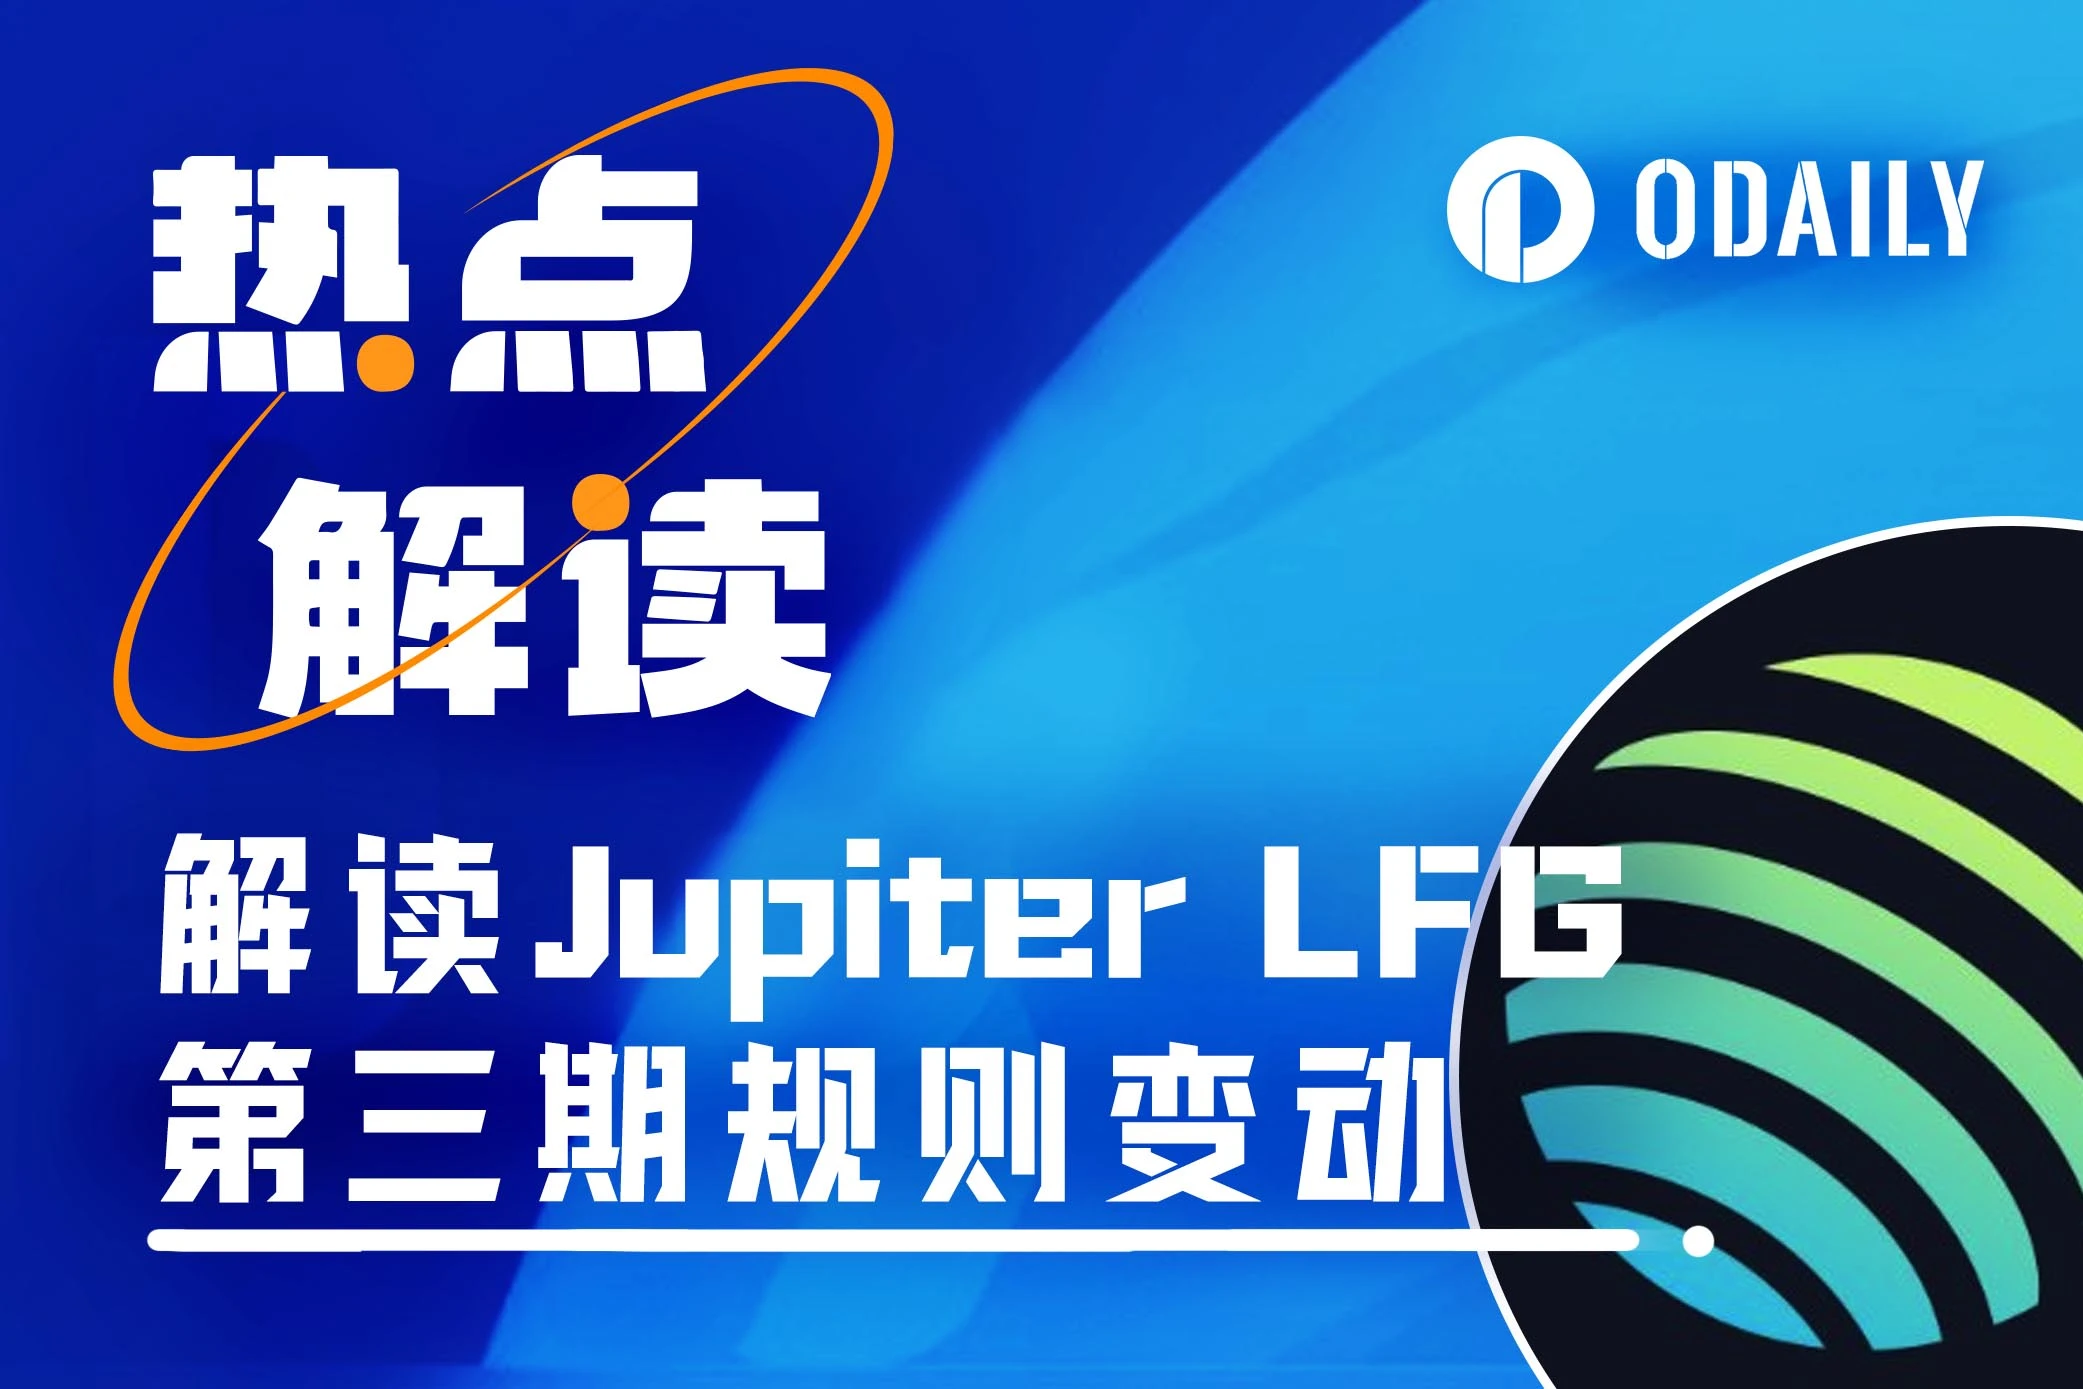 Jupiter LFG第三期投票在即，3分钟速览平台规则变动